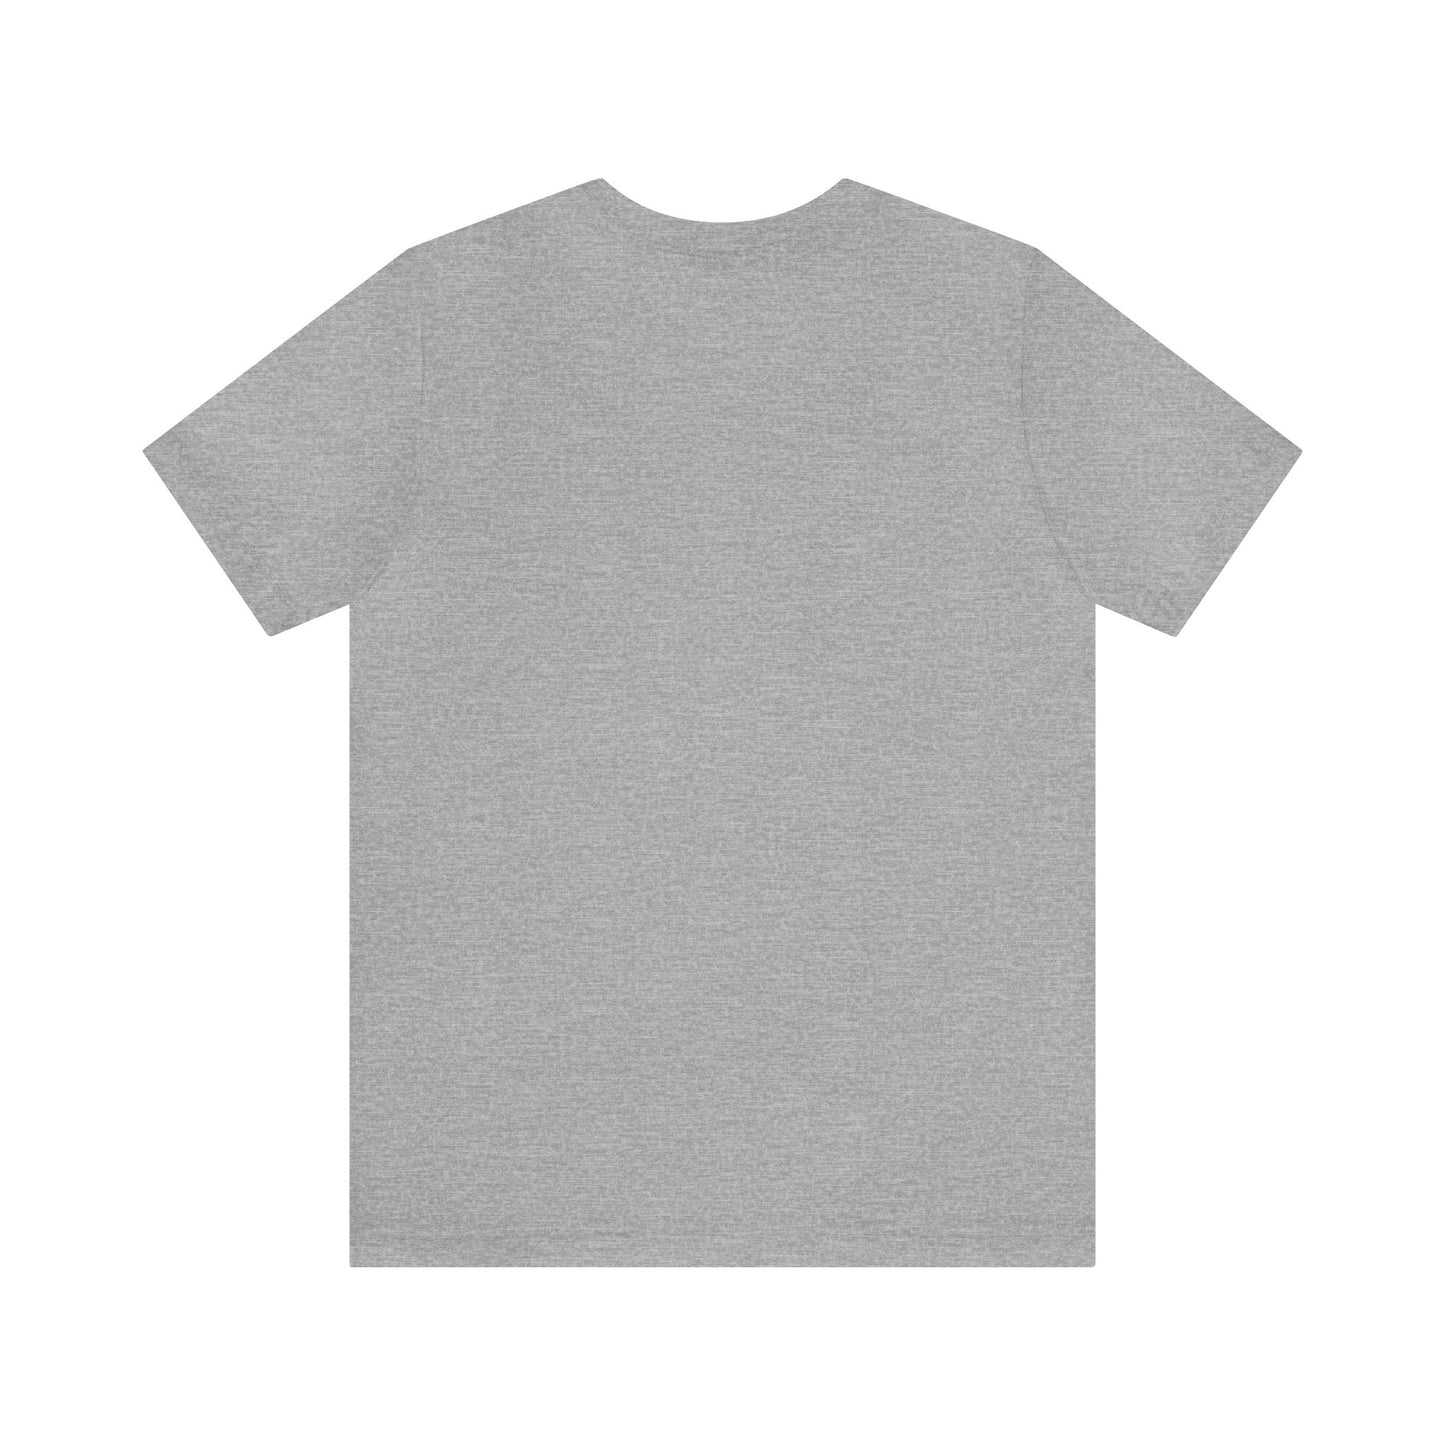 Gay & Tired Short Sleeve Unisex Pride T-Shirt